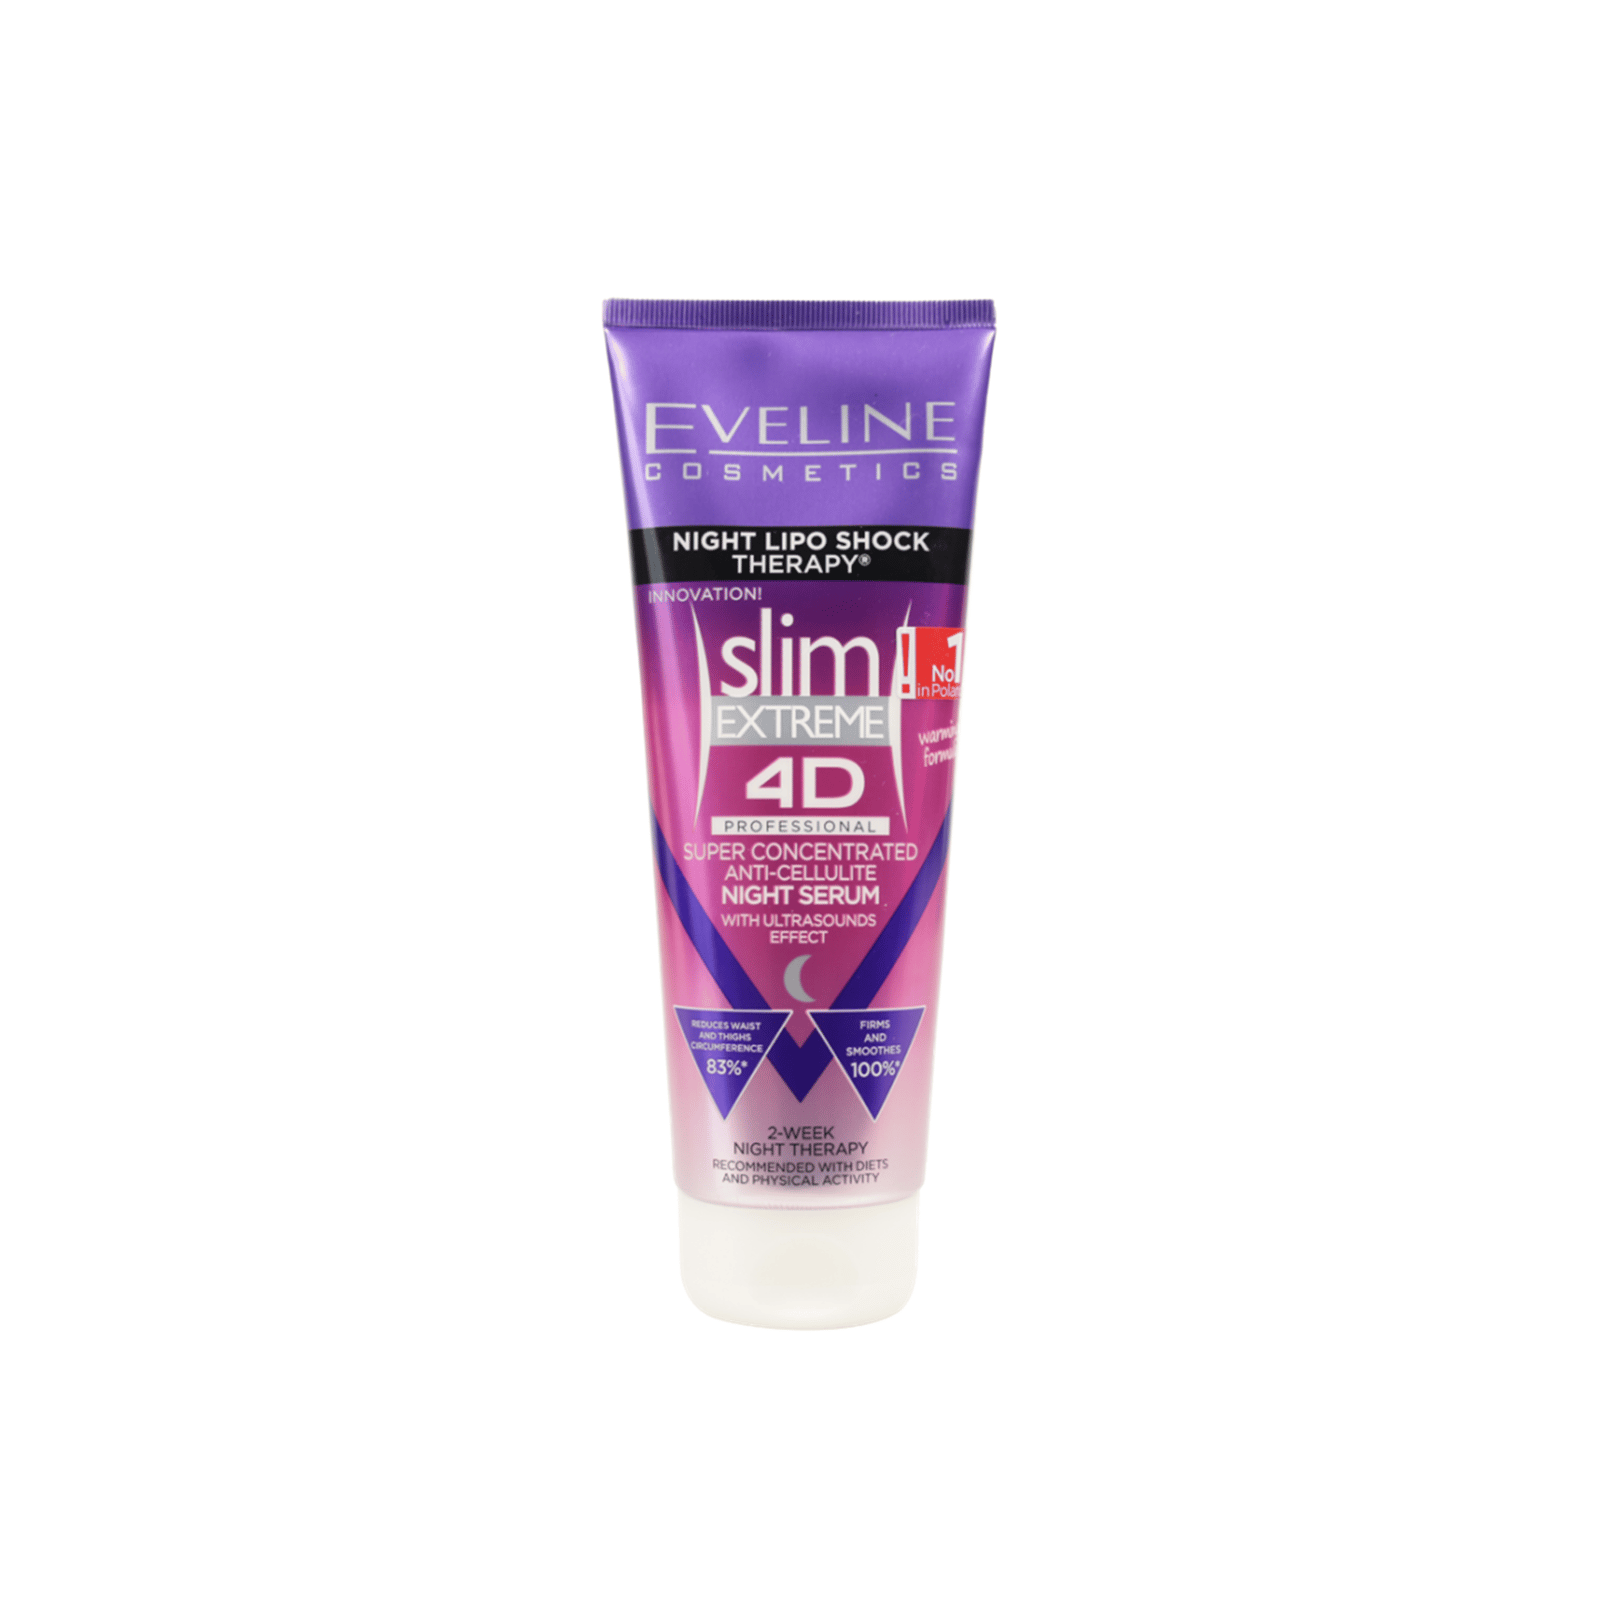 Eveline Cosmetics Slim Extreme 4D Night Lipo Shock Therapy Anti-Cellulite Serum 250ml